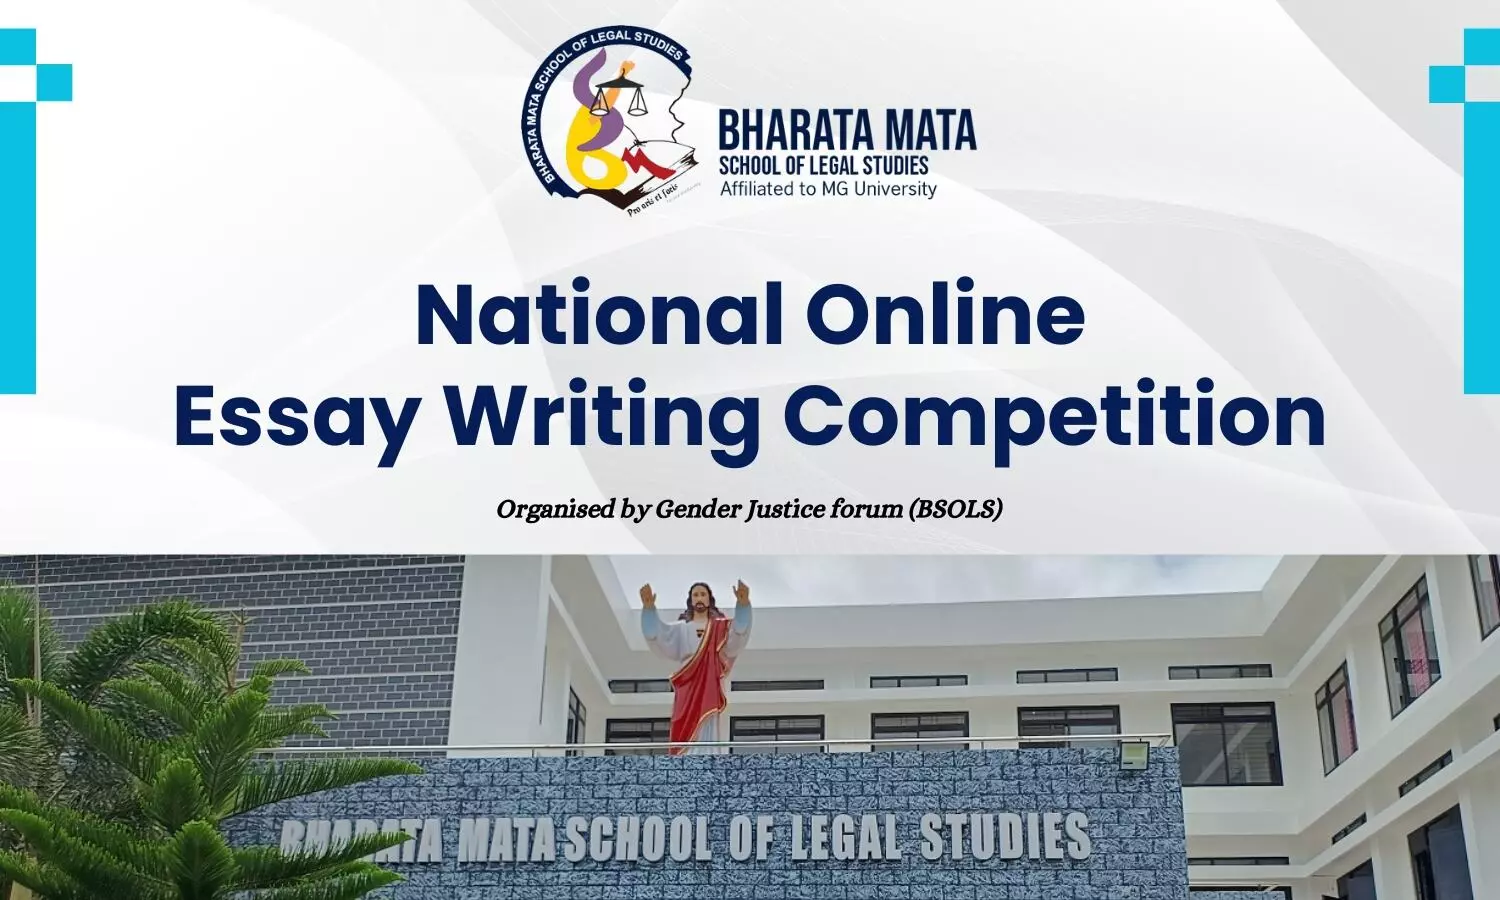 National Online Essay Writing Competition | Bharata Mata School of Legal Studies, Kerala